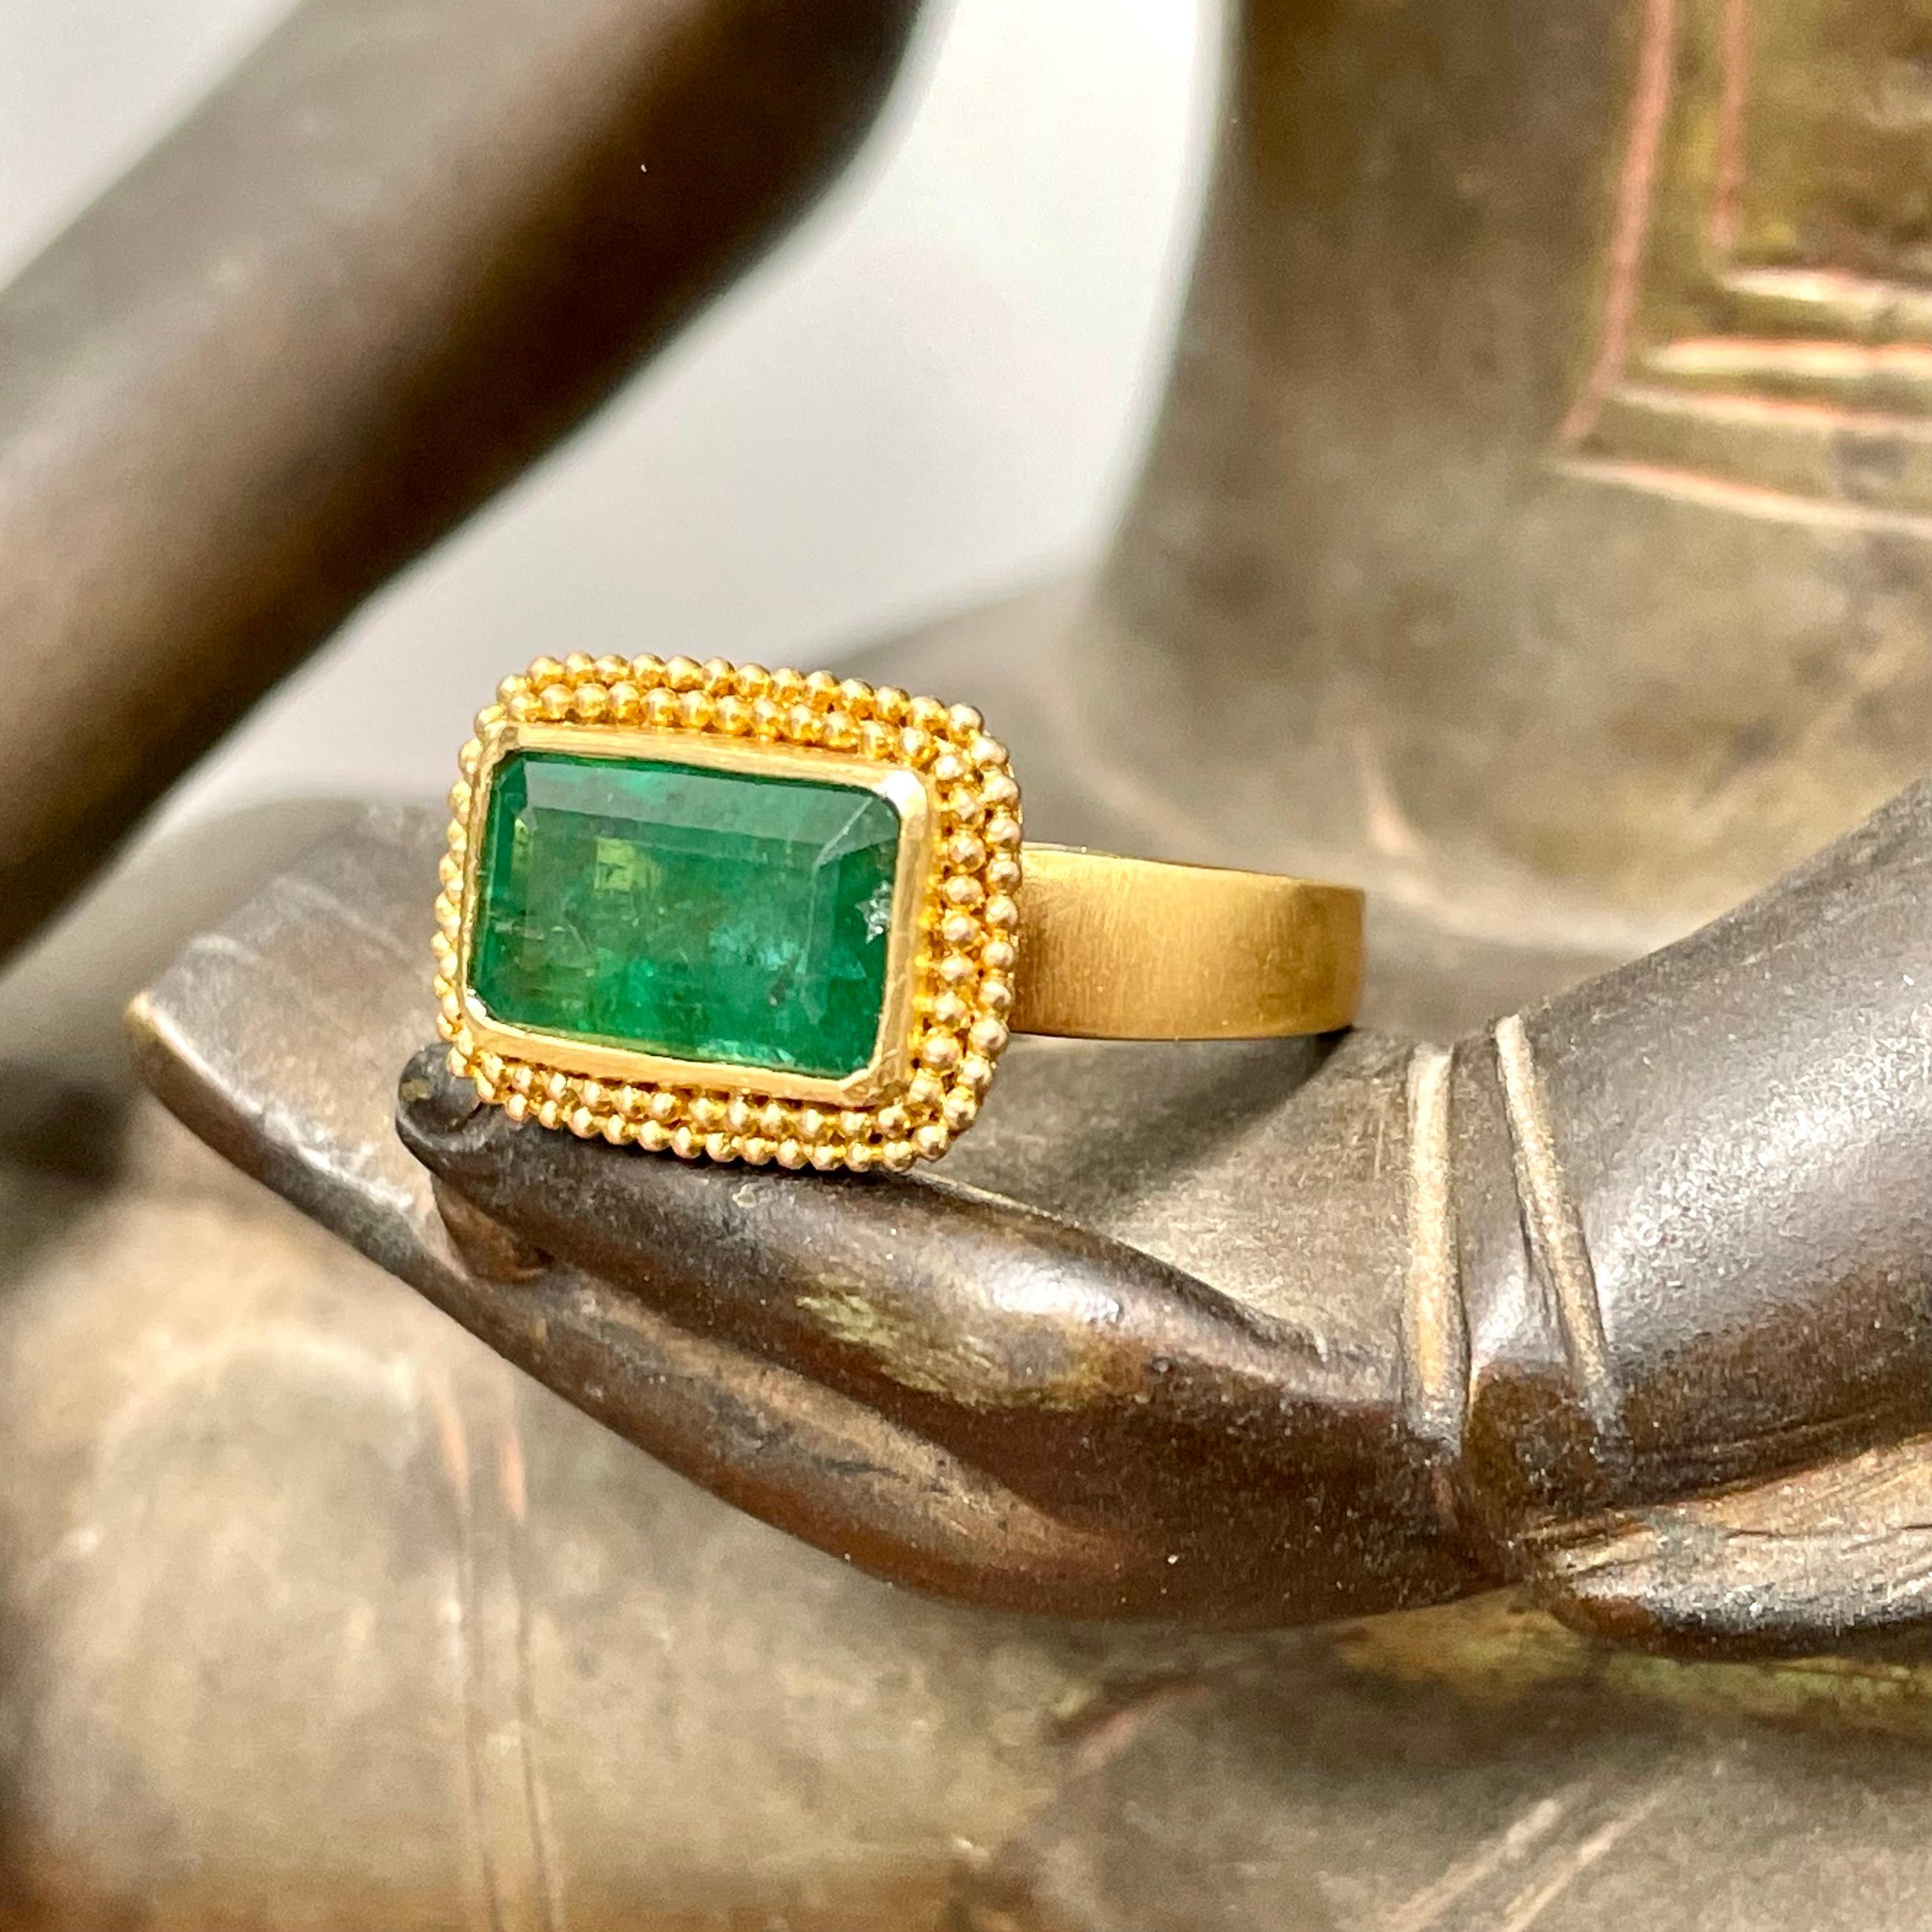 22 carat emerald ring